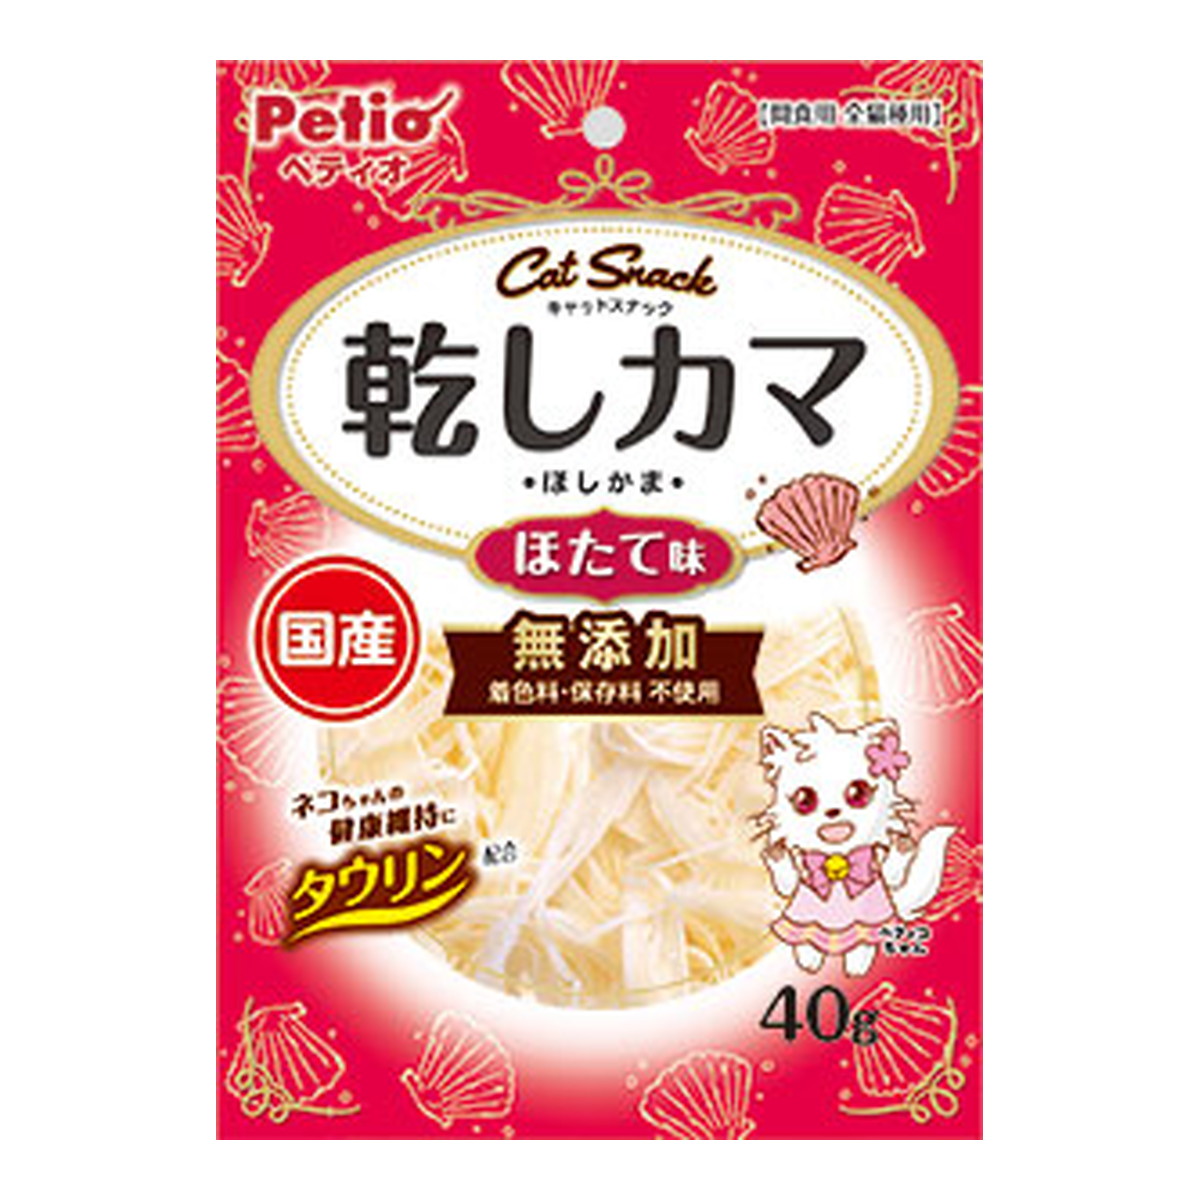 [ free shipping * bulk buying ×120 piece set ]petio cat SNACK snack ..kama. length taste 40g